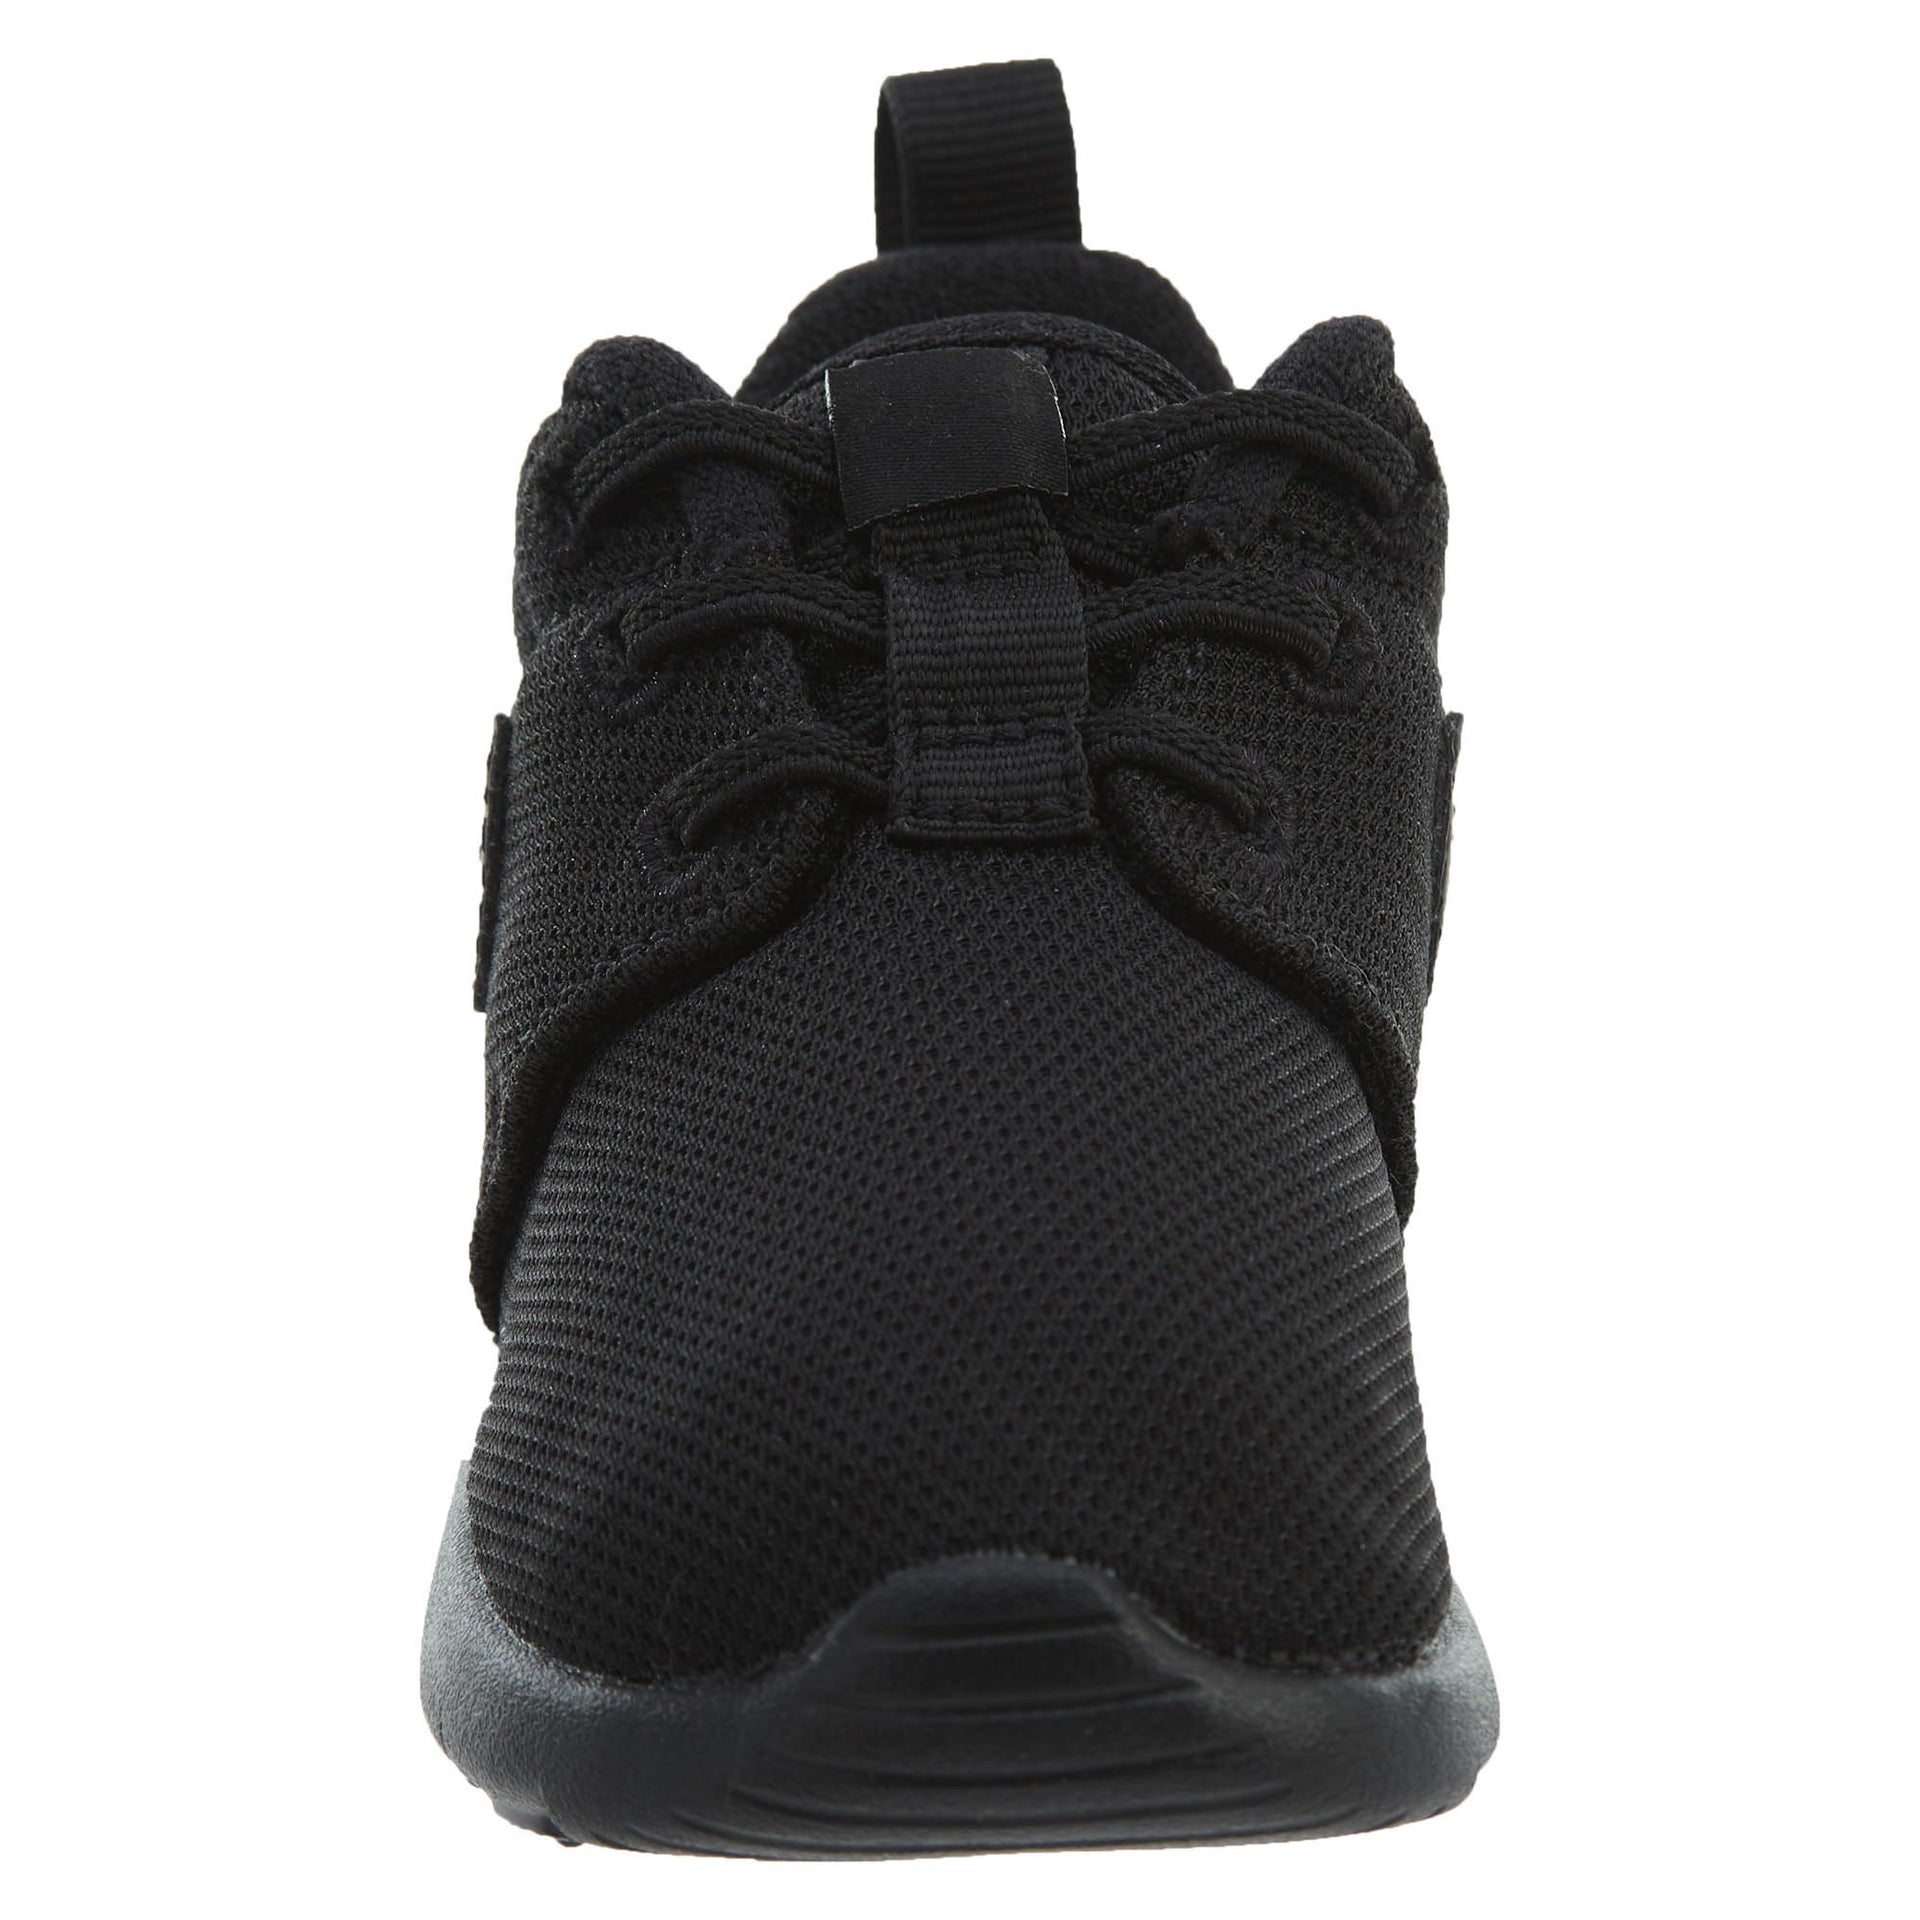 Nike Roshe One Toddlers Black Mesh Athletic Shoes Boys / Girls Style :749430